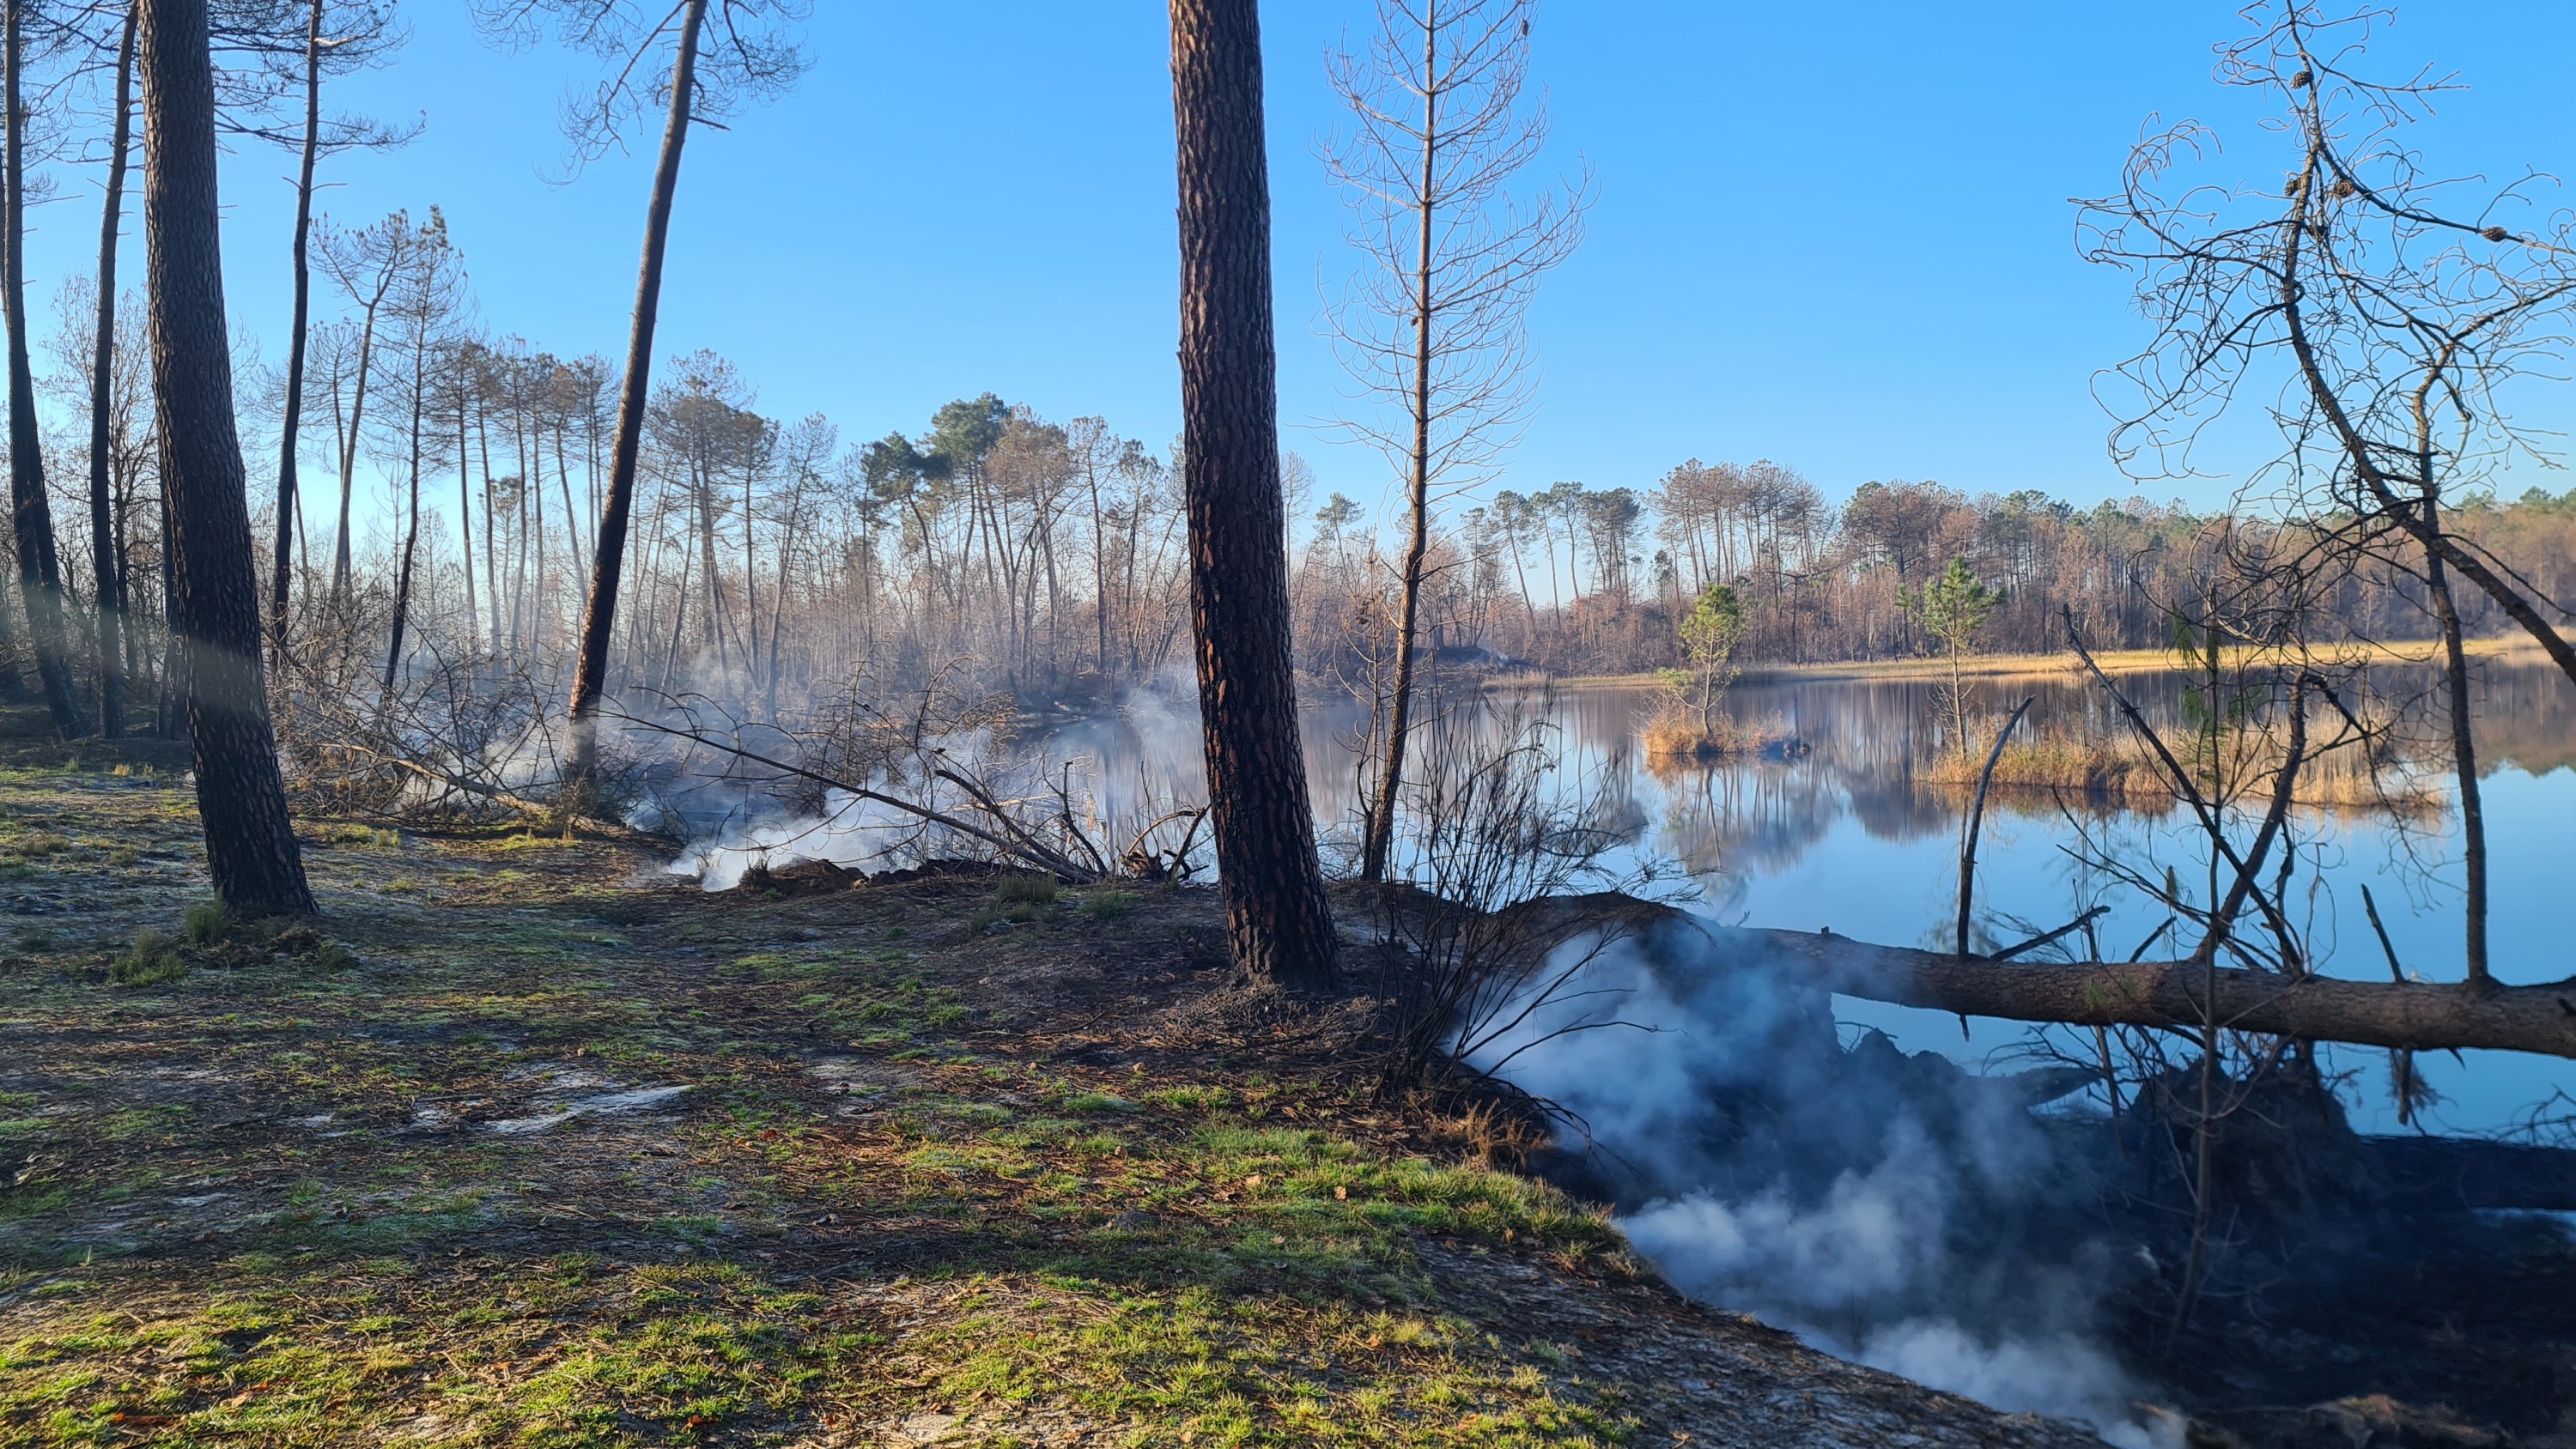 Incendie en Gironde : Plus de 10 terrains de foot brûlent chaque